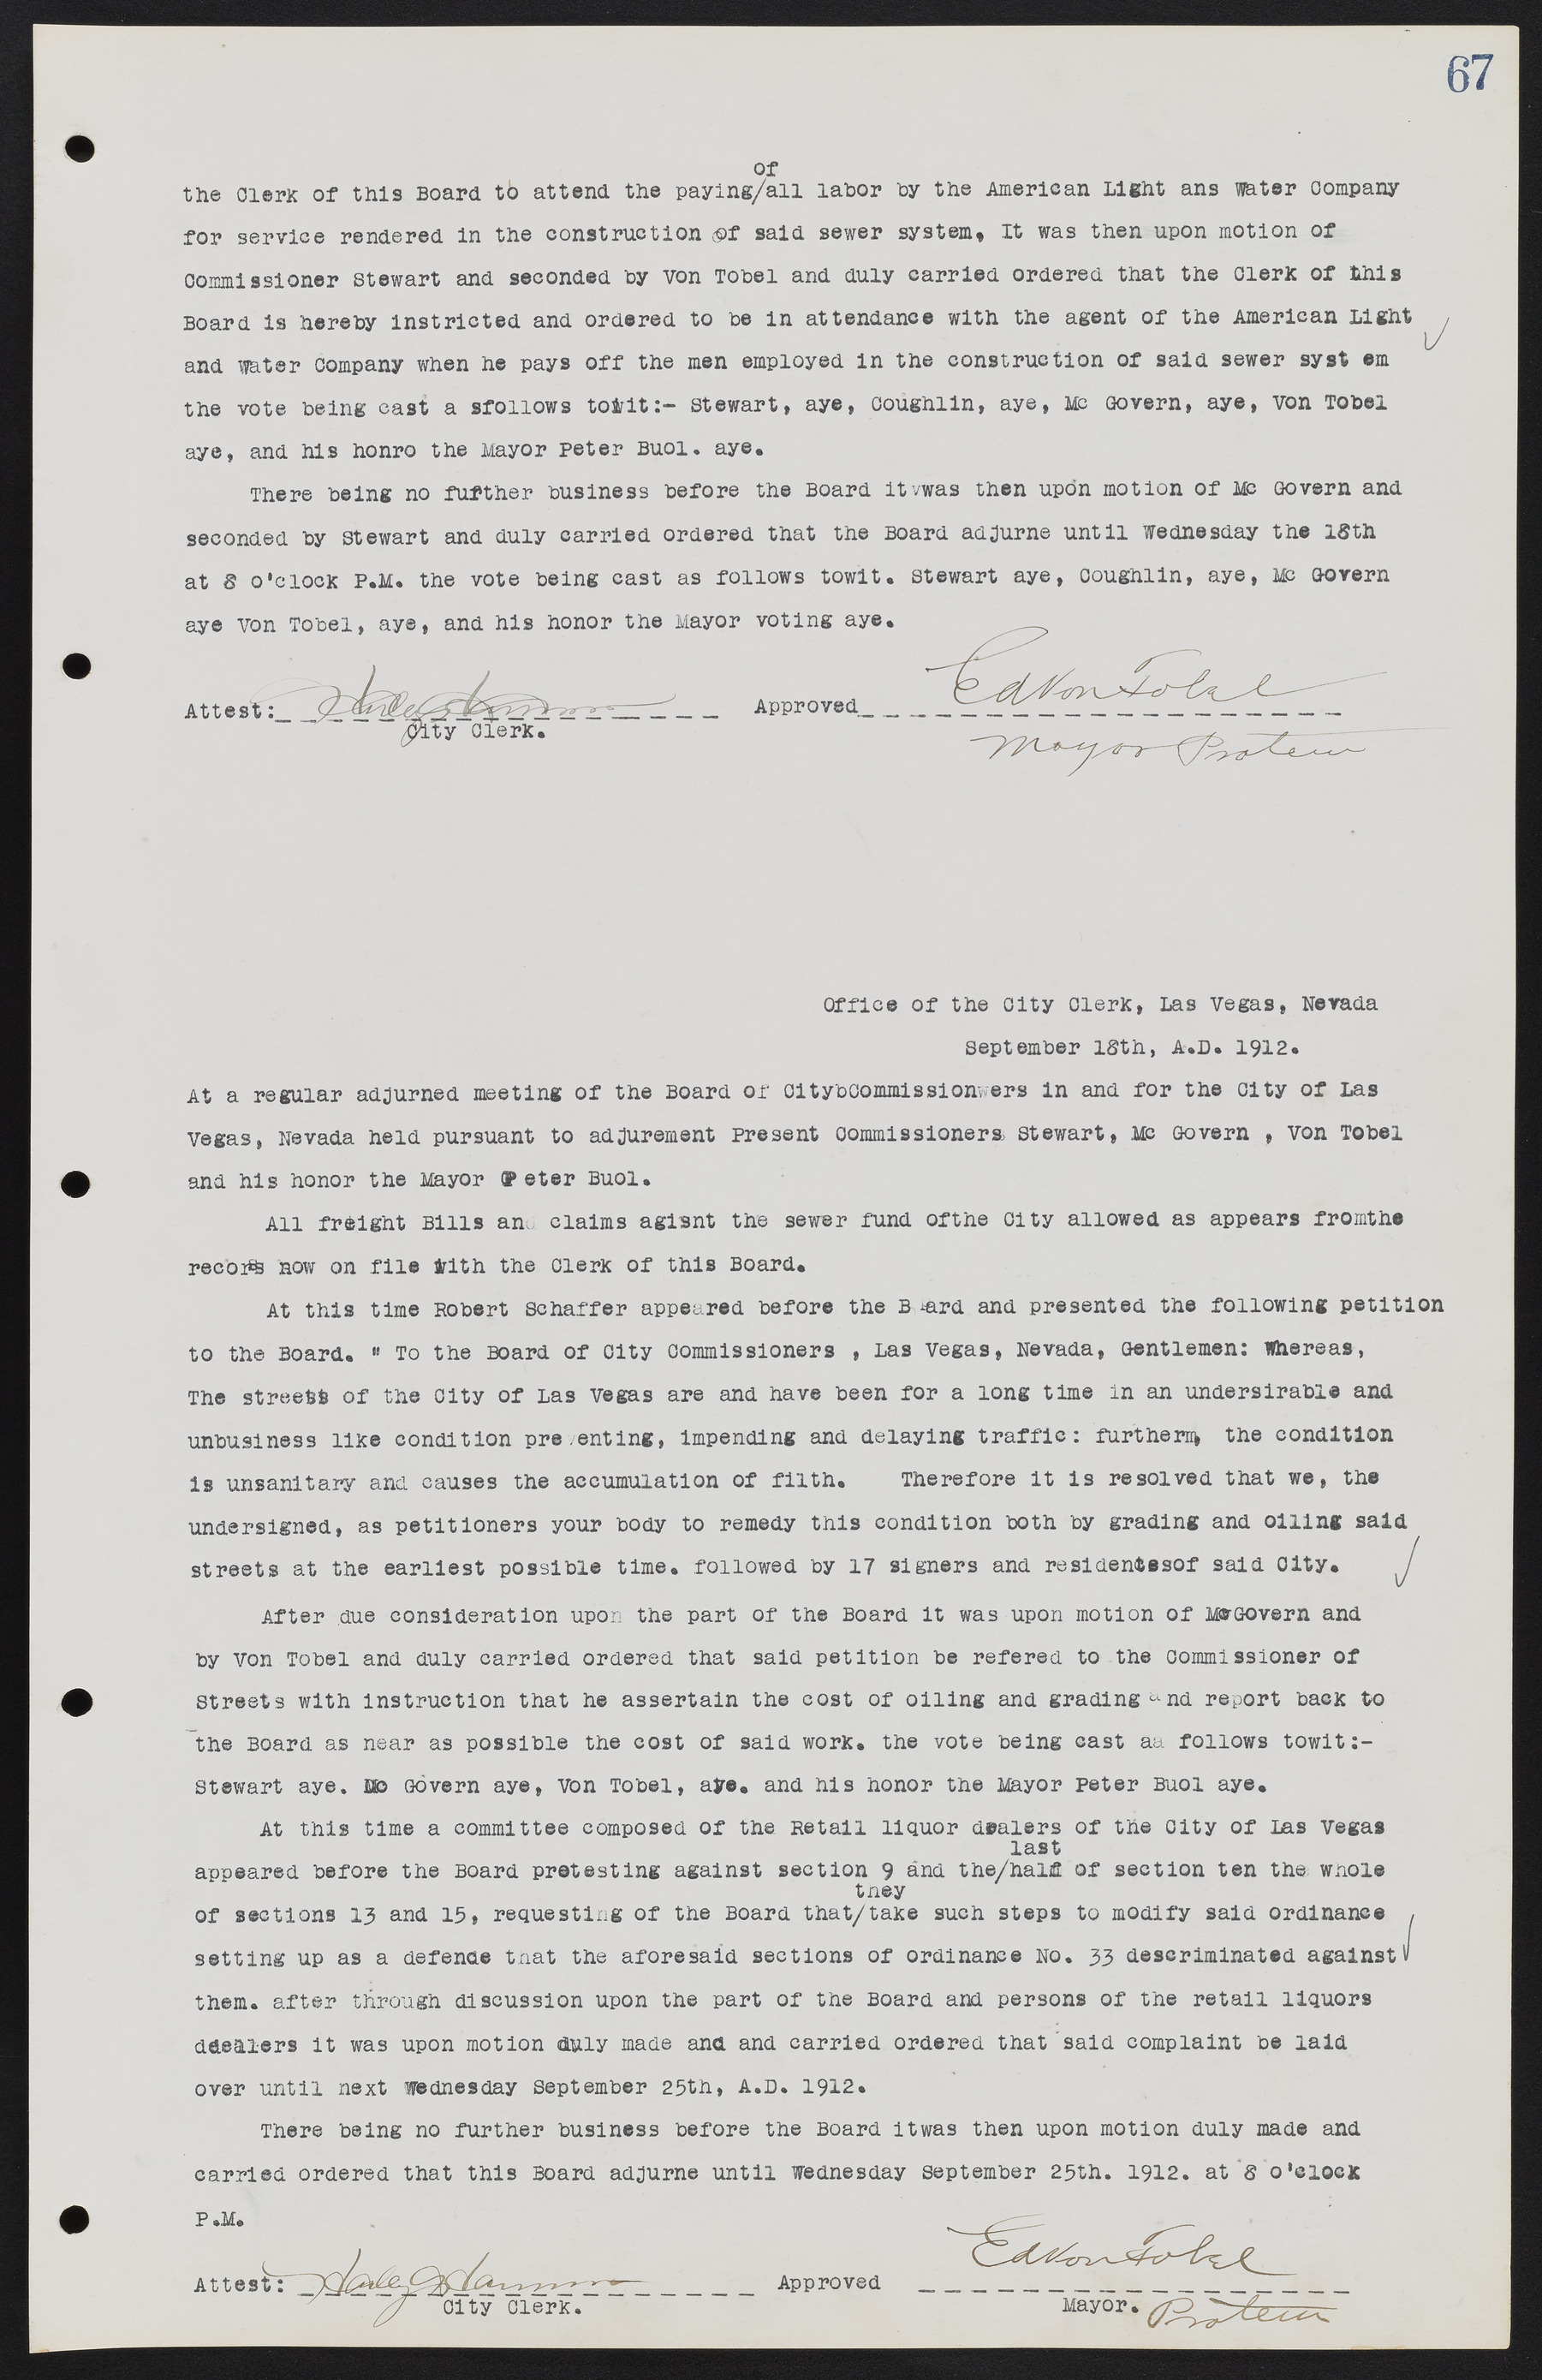 Las Vegas City Commission Minutes, June 22, 1911 to February 7, 1922, lvc000001-81